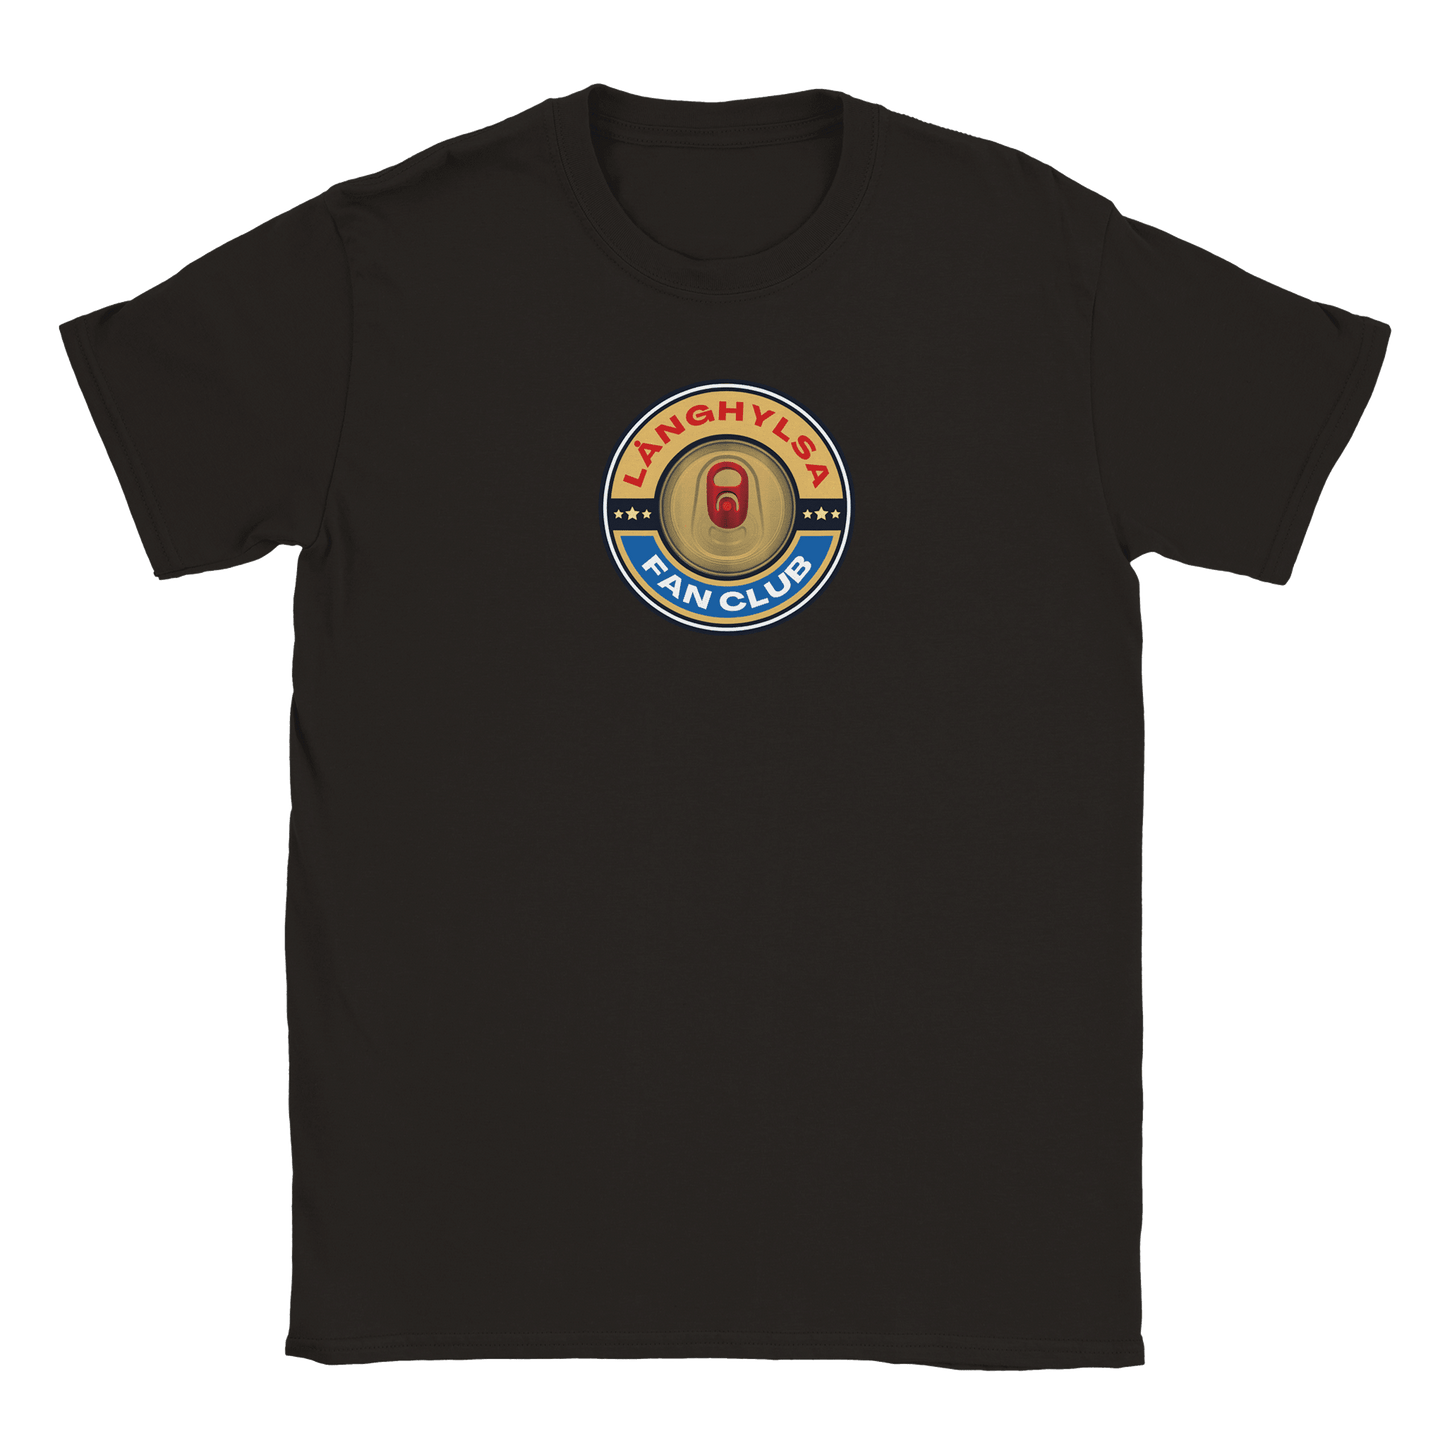 Långhylsa Fan Club Norrland Edition - T-shirt Svart